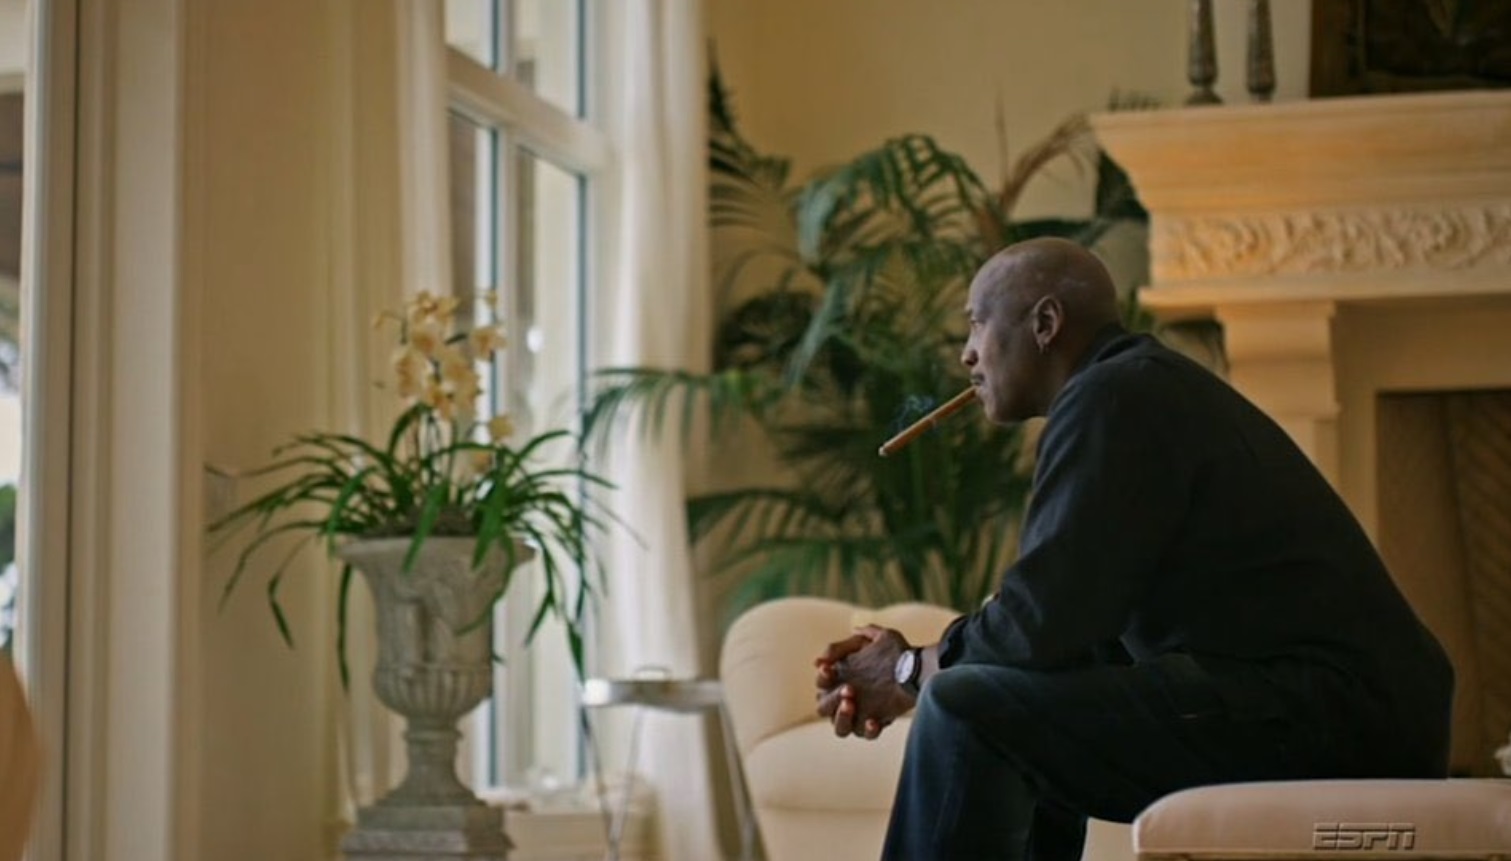 PHOTO Michael Jordan Smoking A 1 Foot Long Cigar Inside His Florida Home